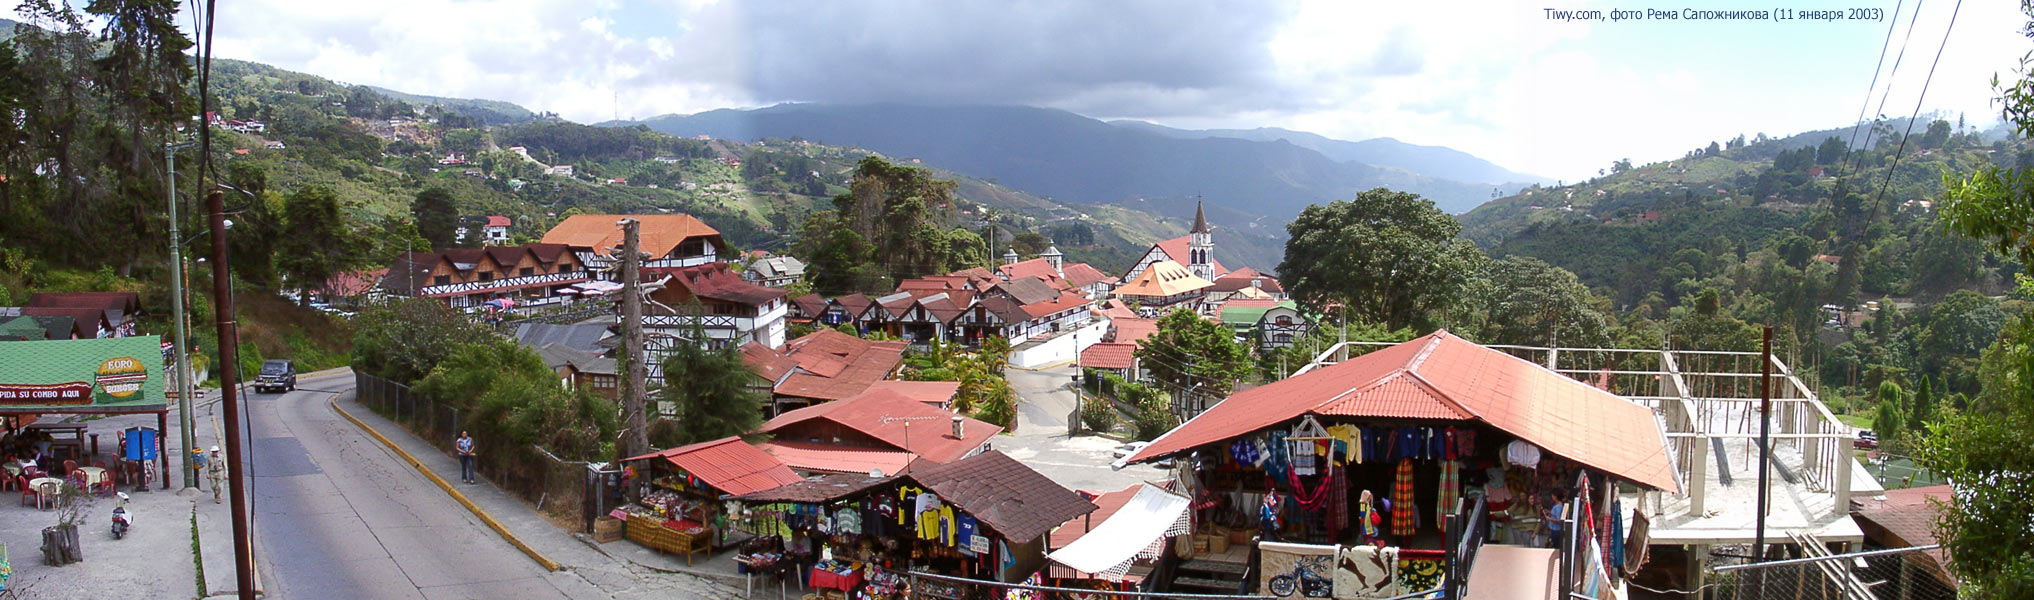 Colonia Tovar, Venezuela